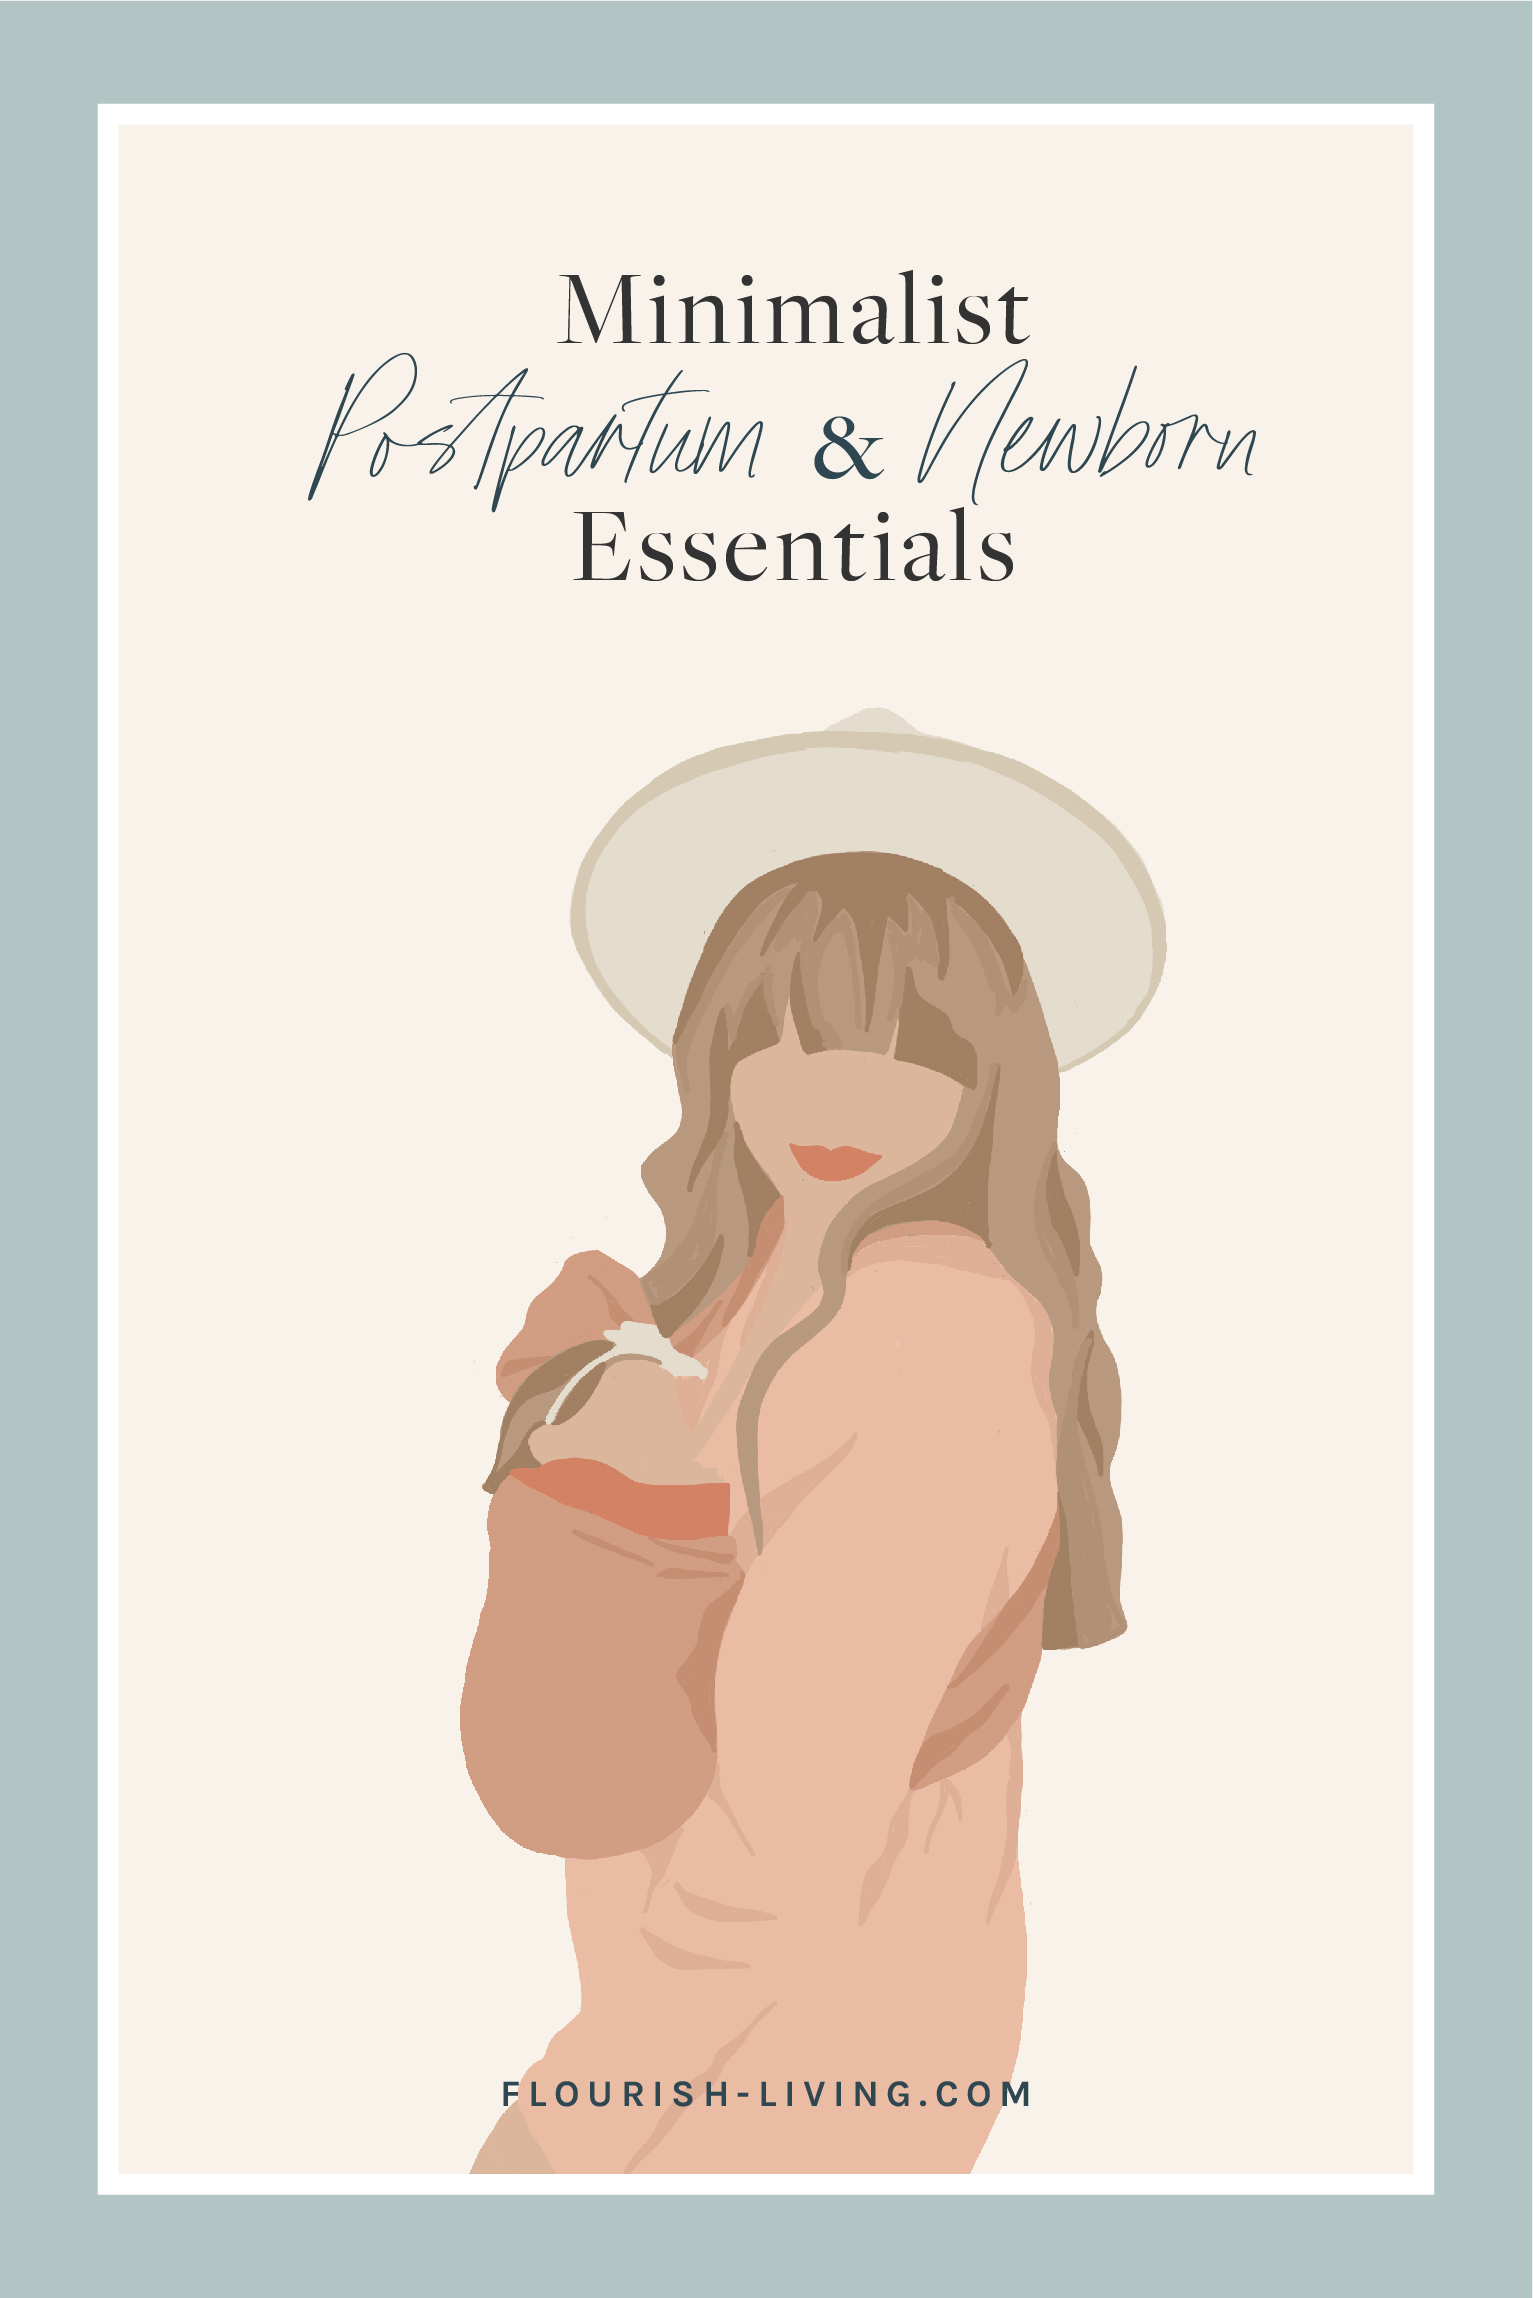 Minimalist_Postpartum_Newborn_Essentials_Flourish_Caroline_Potter_NTP